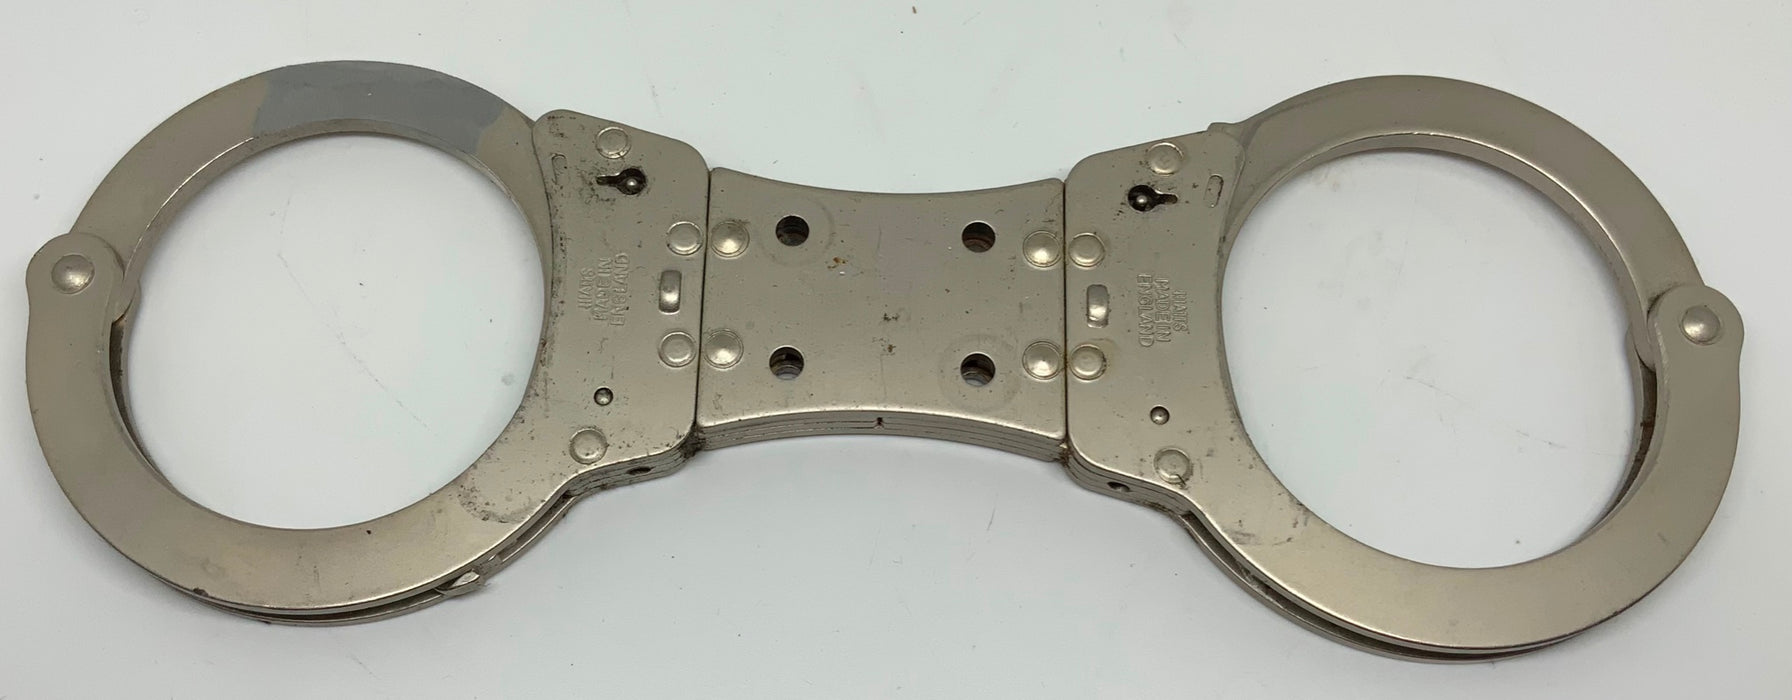 Genuine Hiatts Chrome Rigid Handcuffs Speedcuffs TCH 840 Grade C Without Case